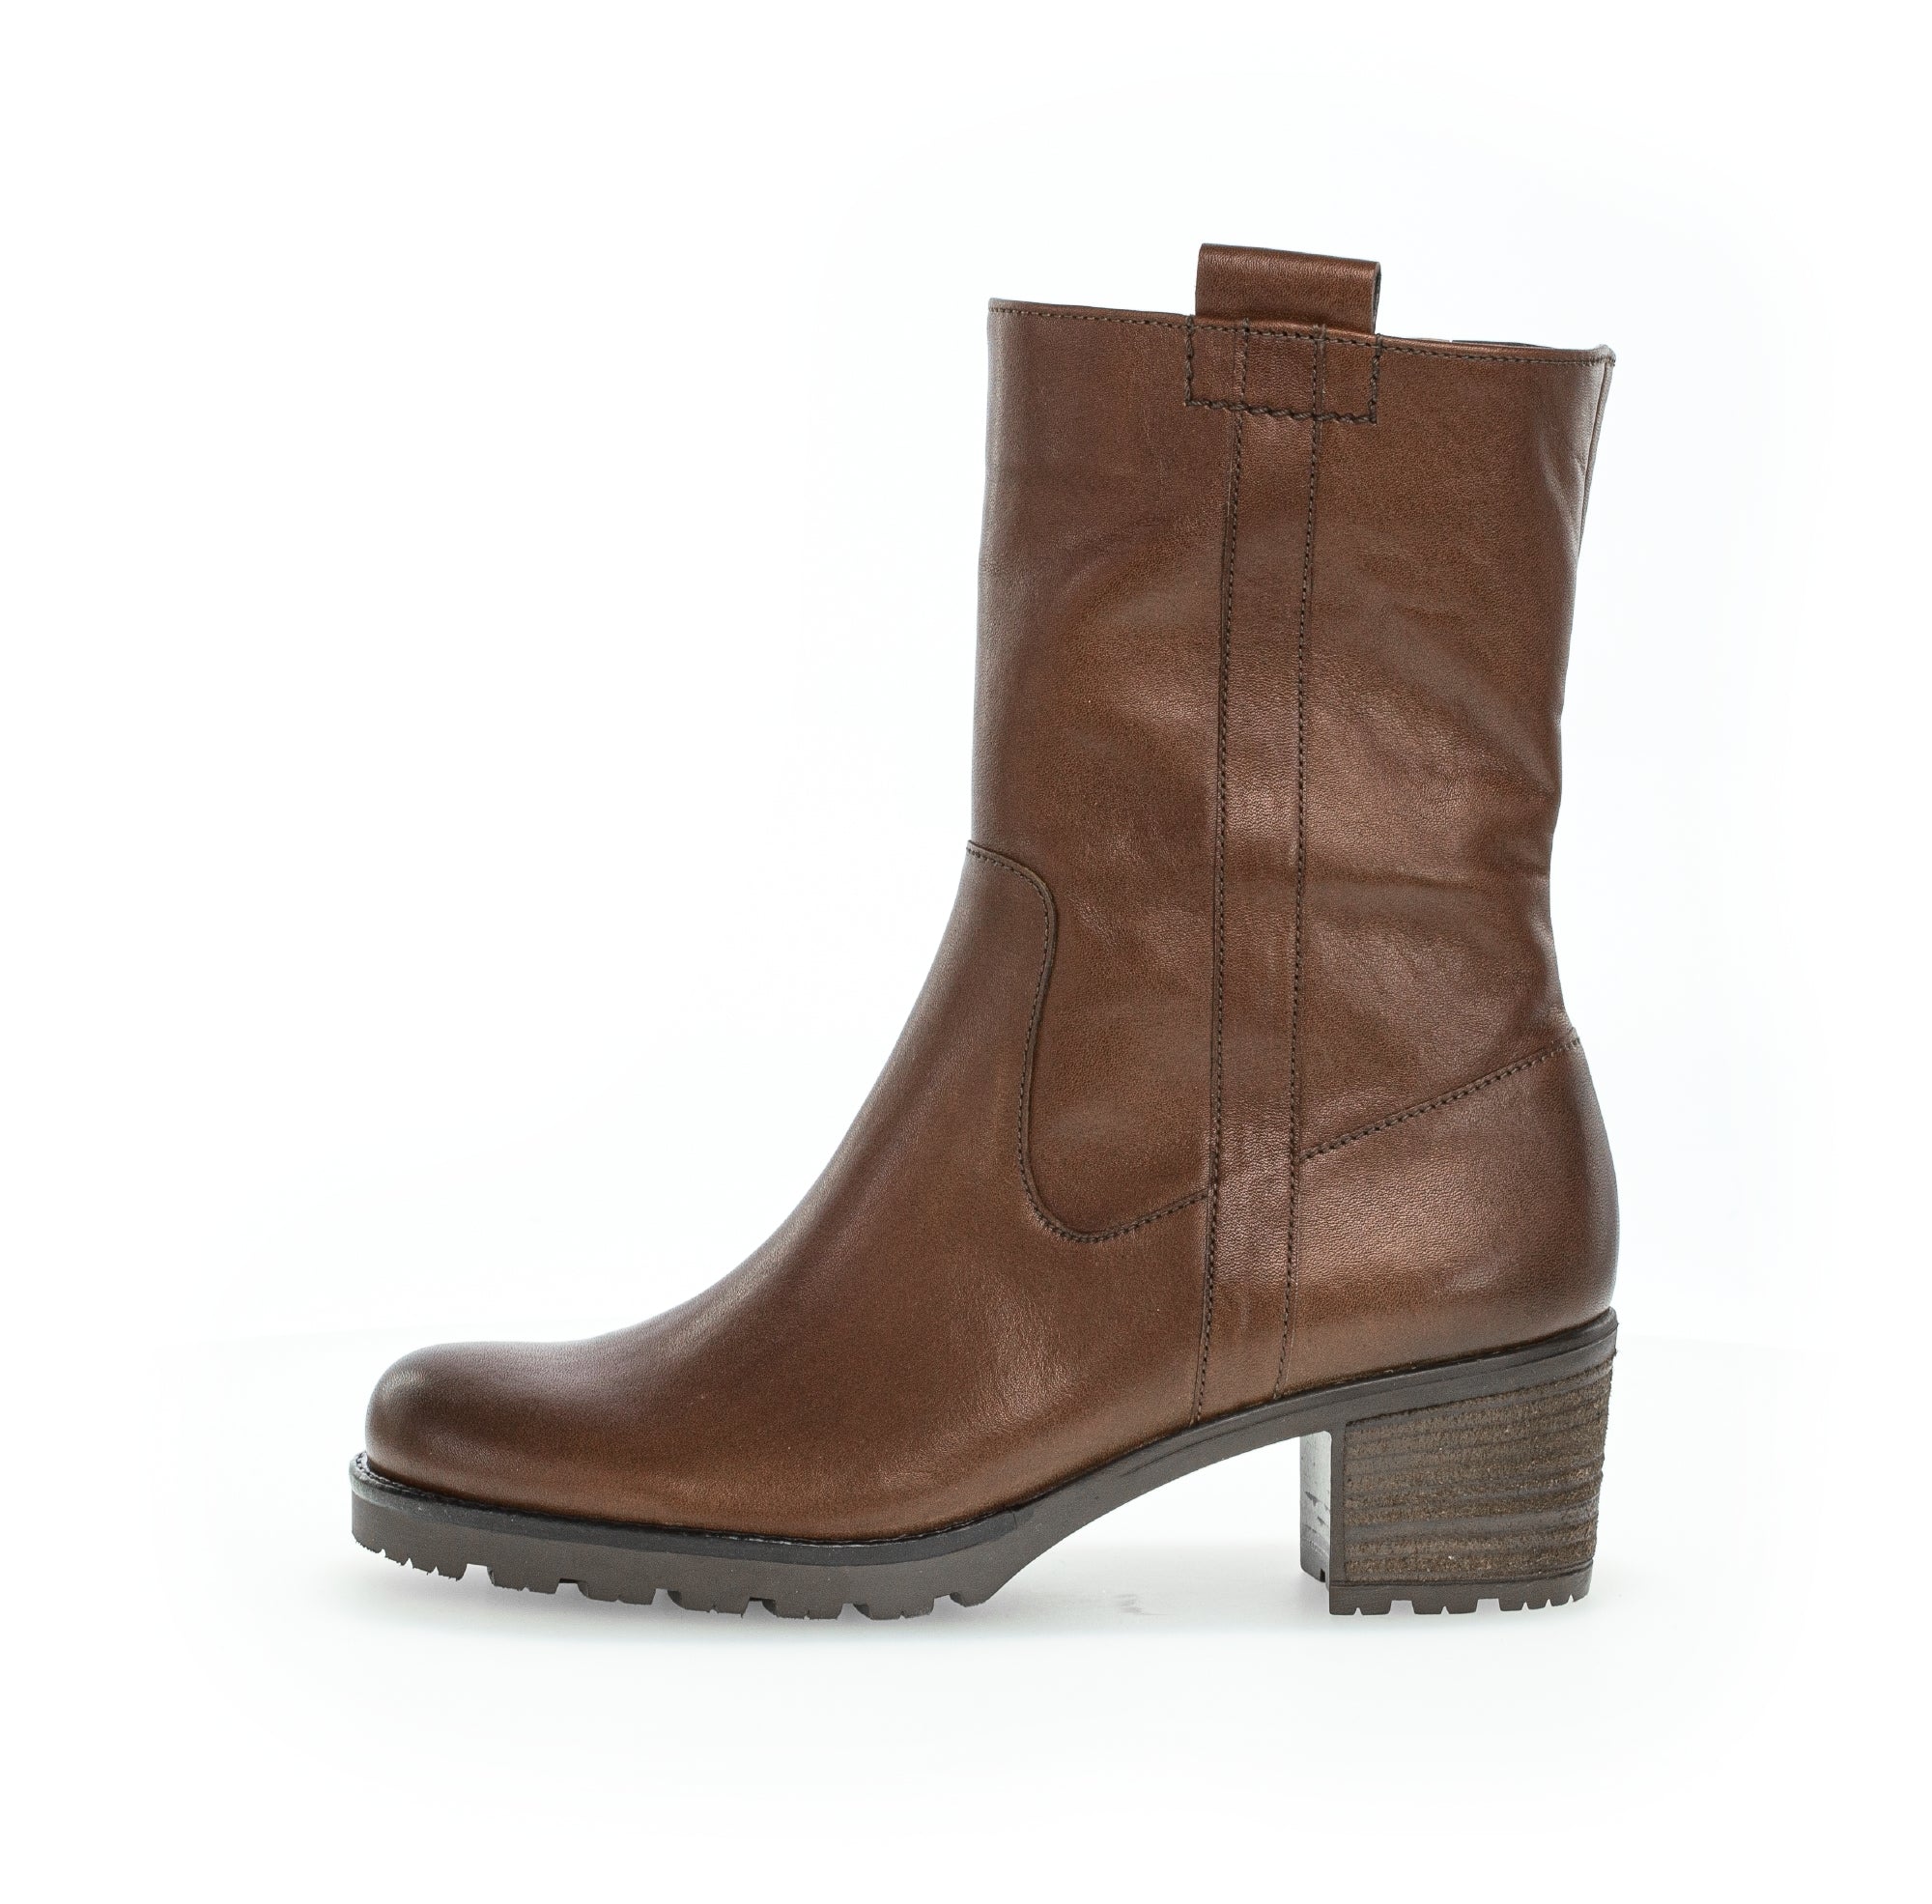 '32.806.55' women's boot - Brown - Chaplinshoes'32.806.55' women's boot - BrownGabor